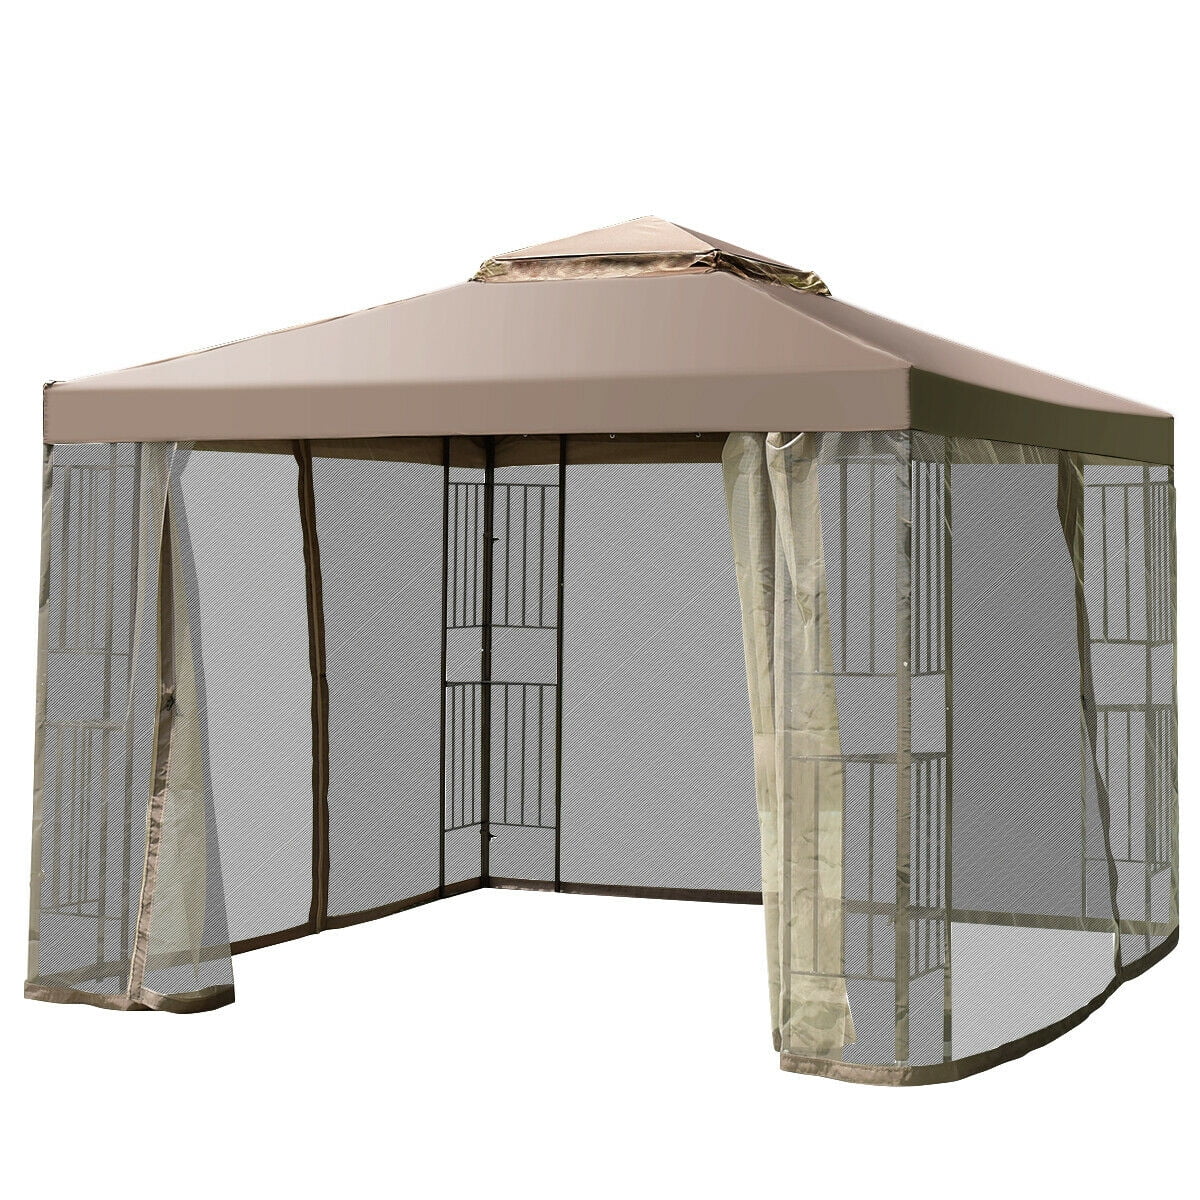 10x10 Outdoor Yard Patio Beach Pop Up Canopy Tent Awning Gazebo Shade Shelter 